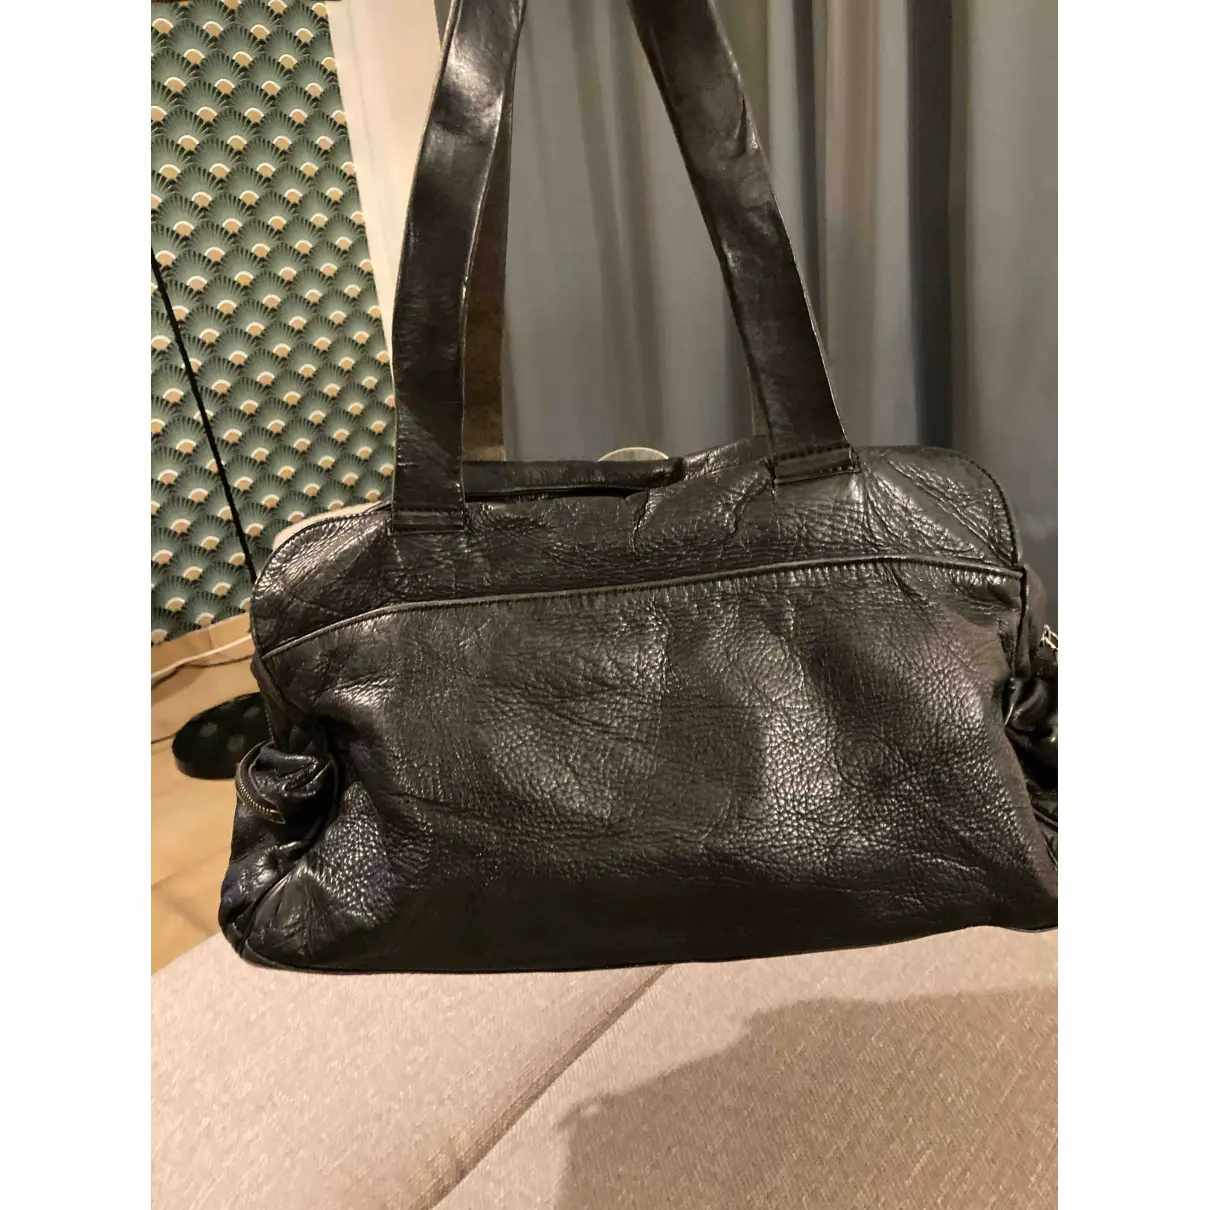 Buy Ikks Leather handbag online